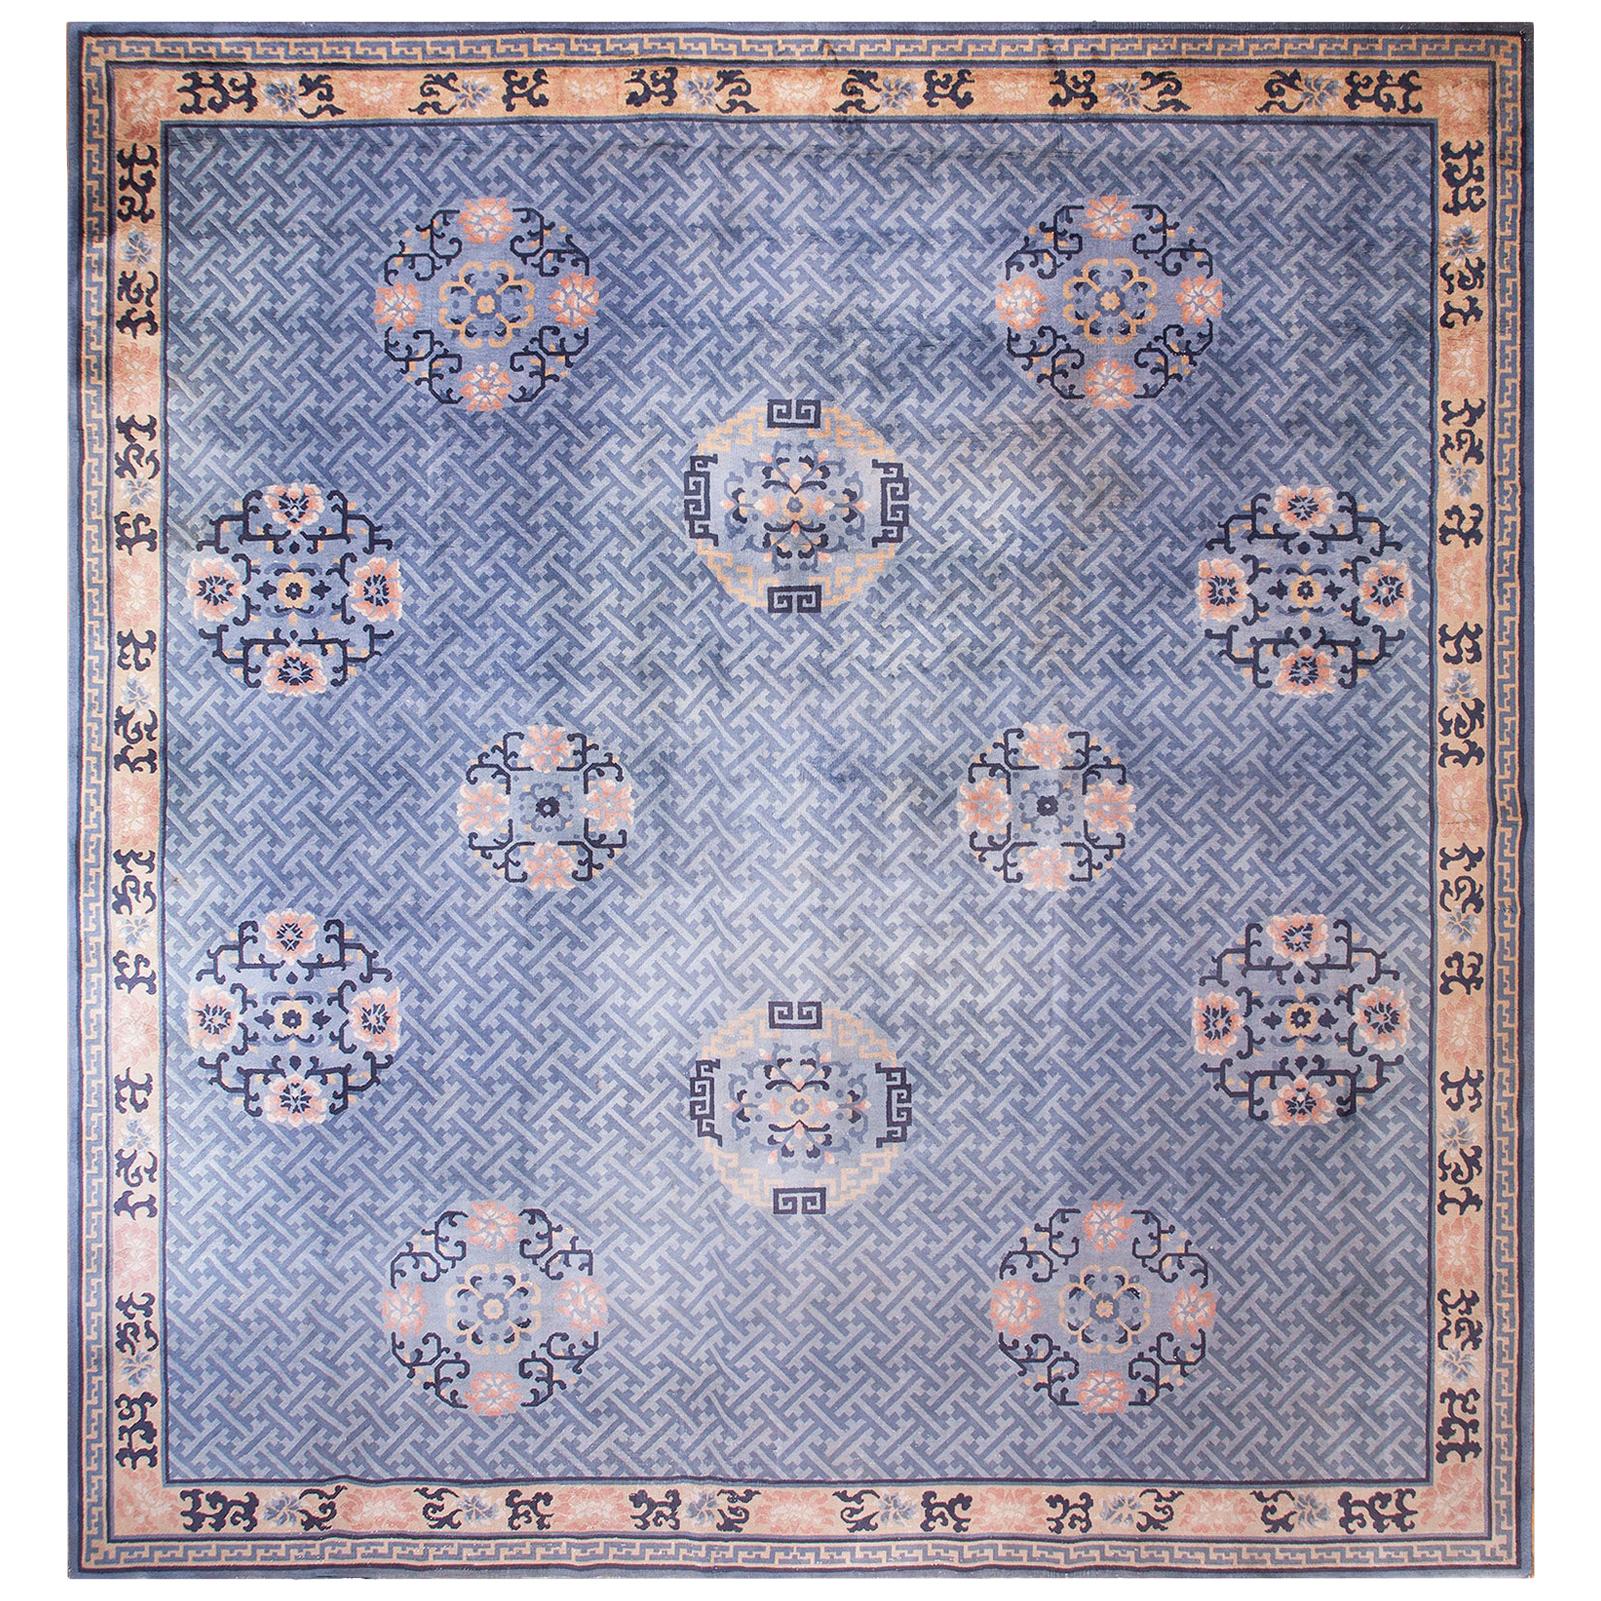 1920s Chinese Art Deco Carpet ( 13'6" x 14'3" - 412 x 435 cm )